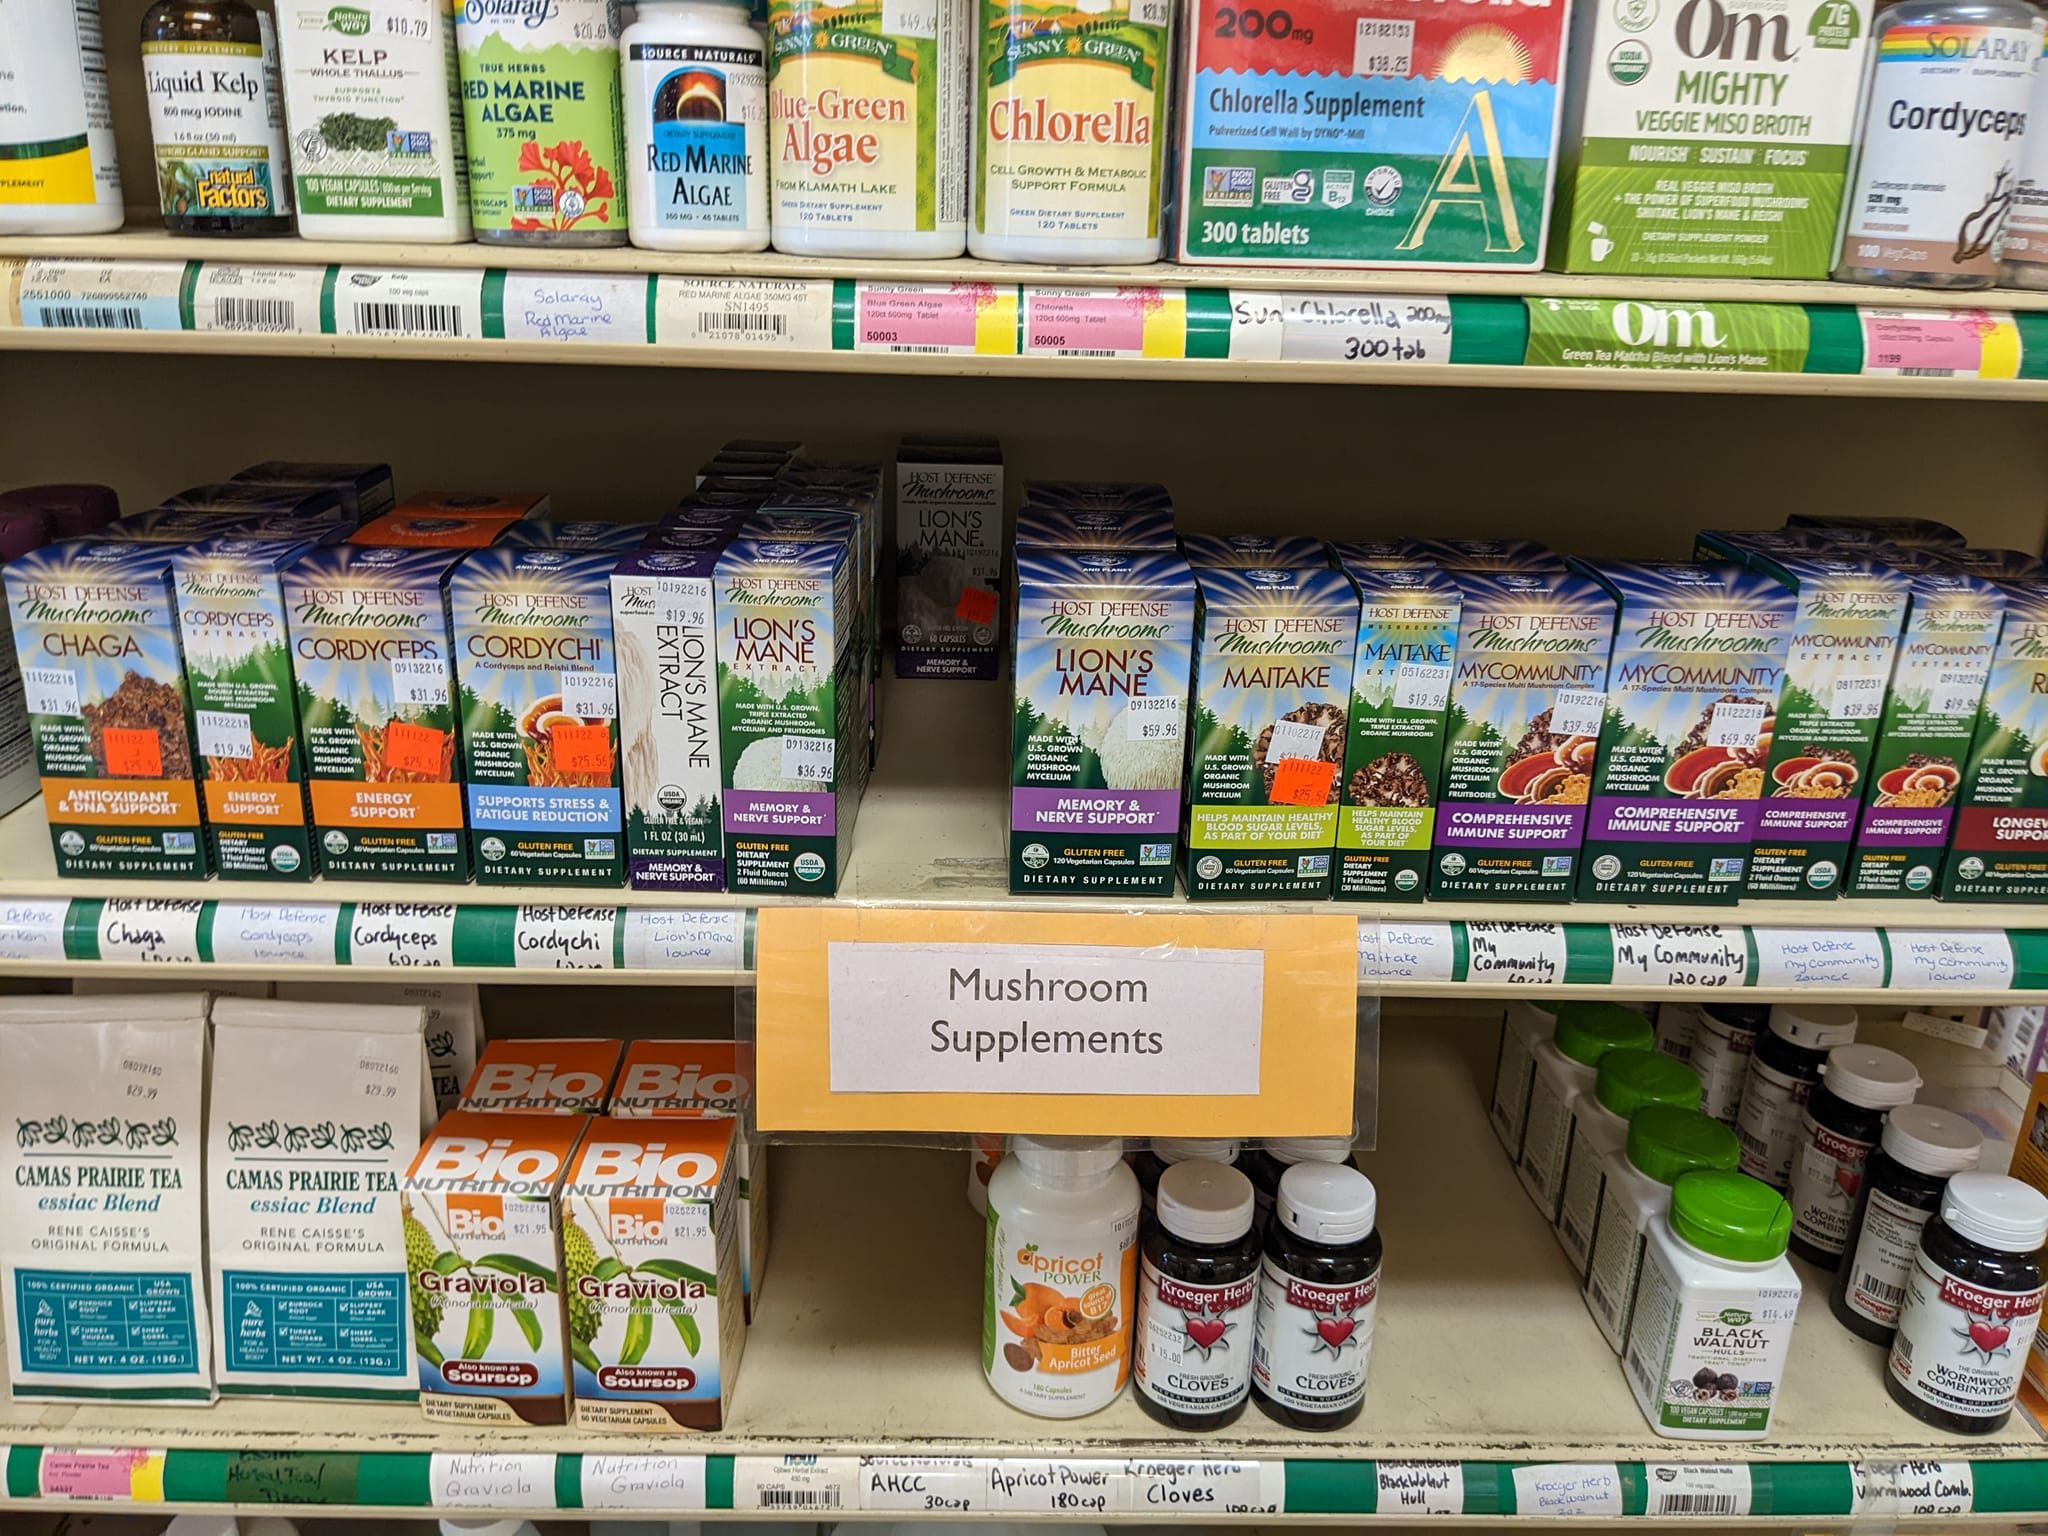 A shelf of mushroom supplements